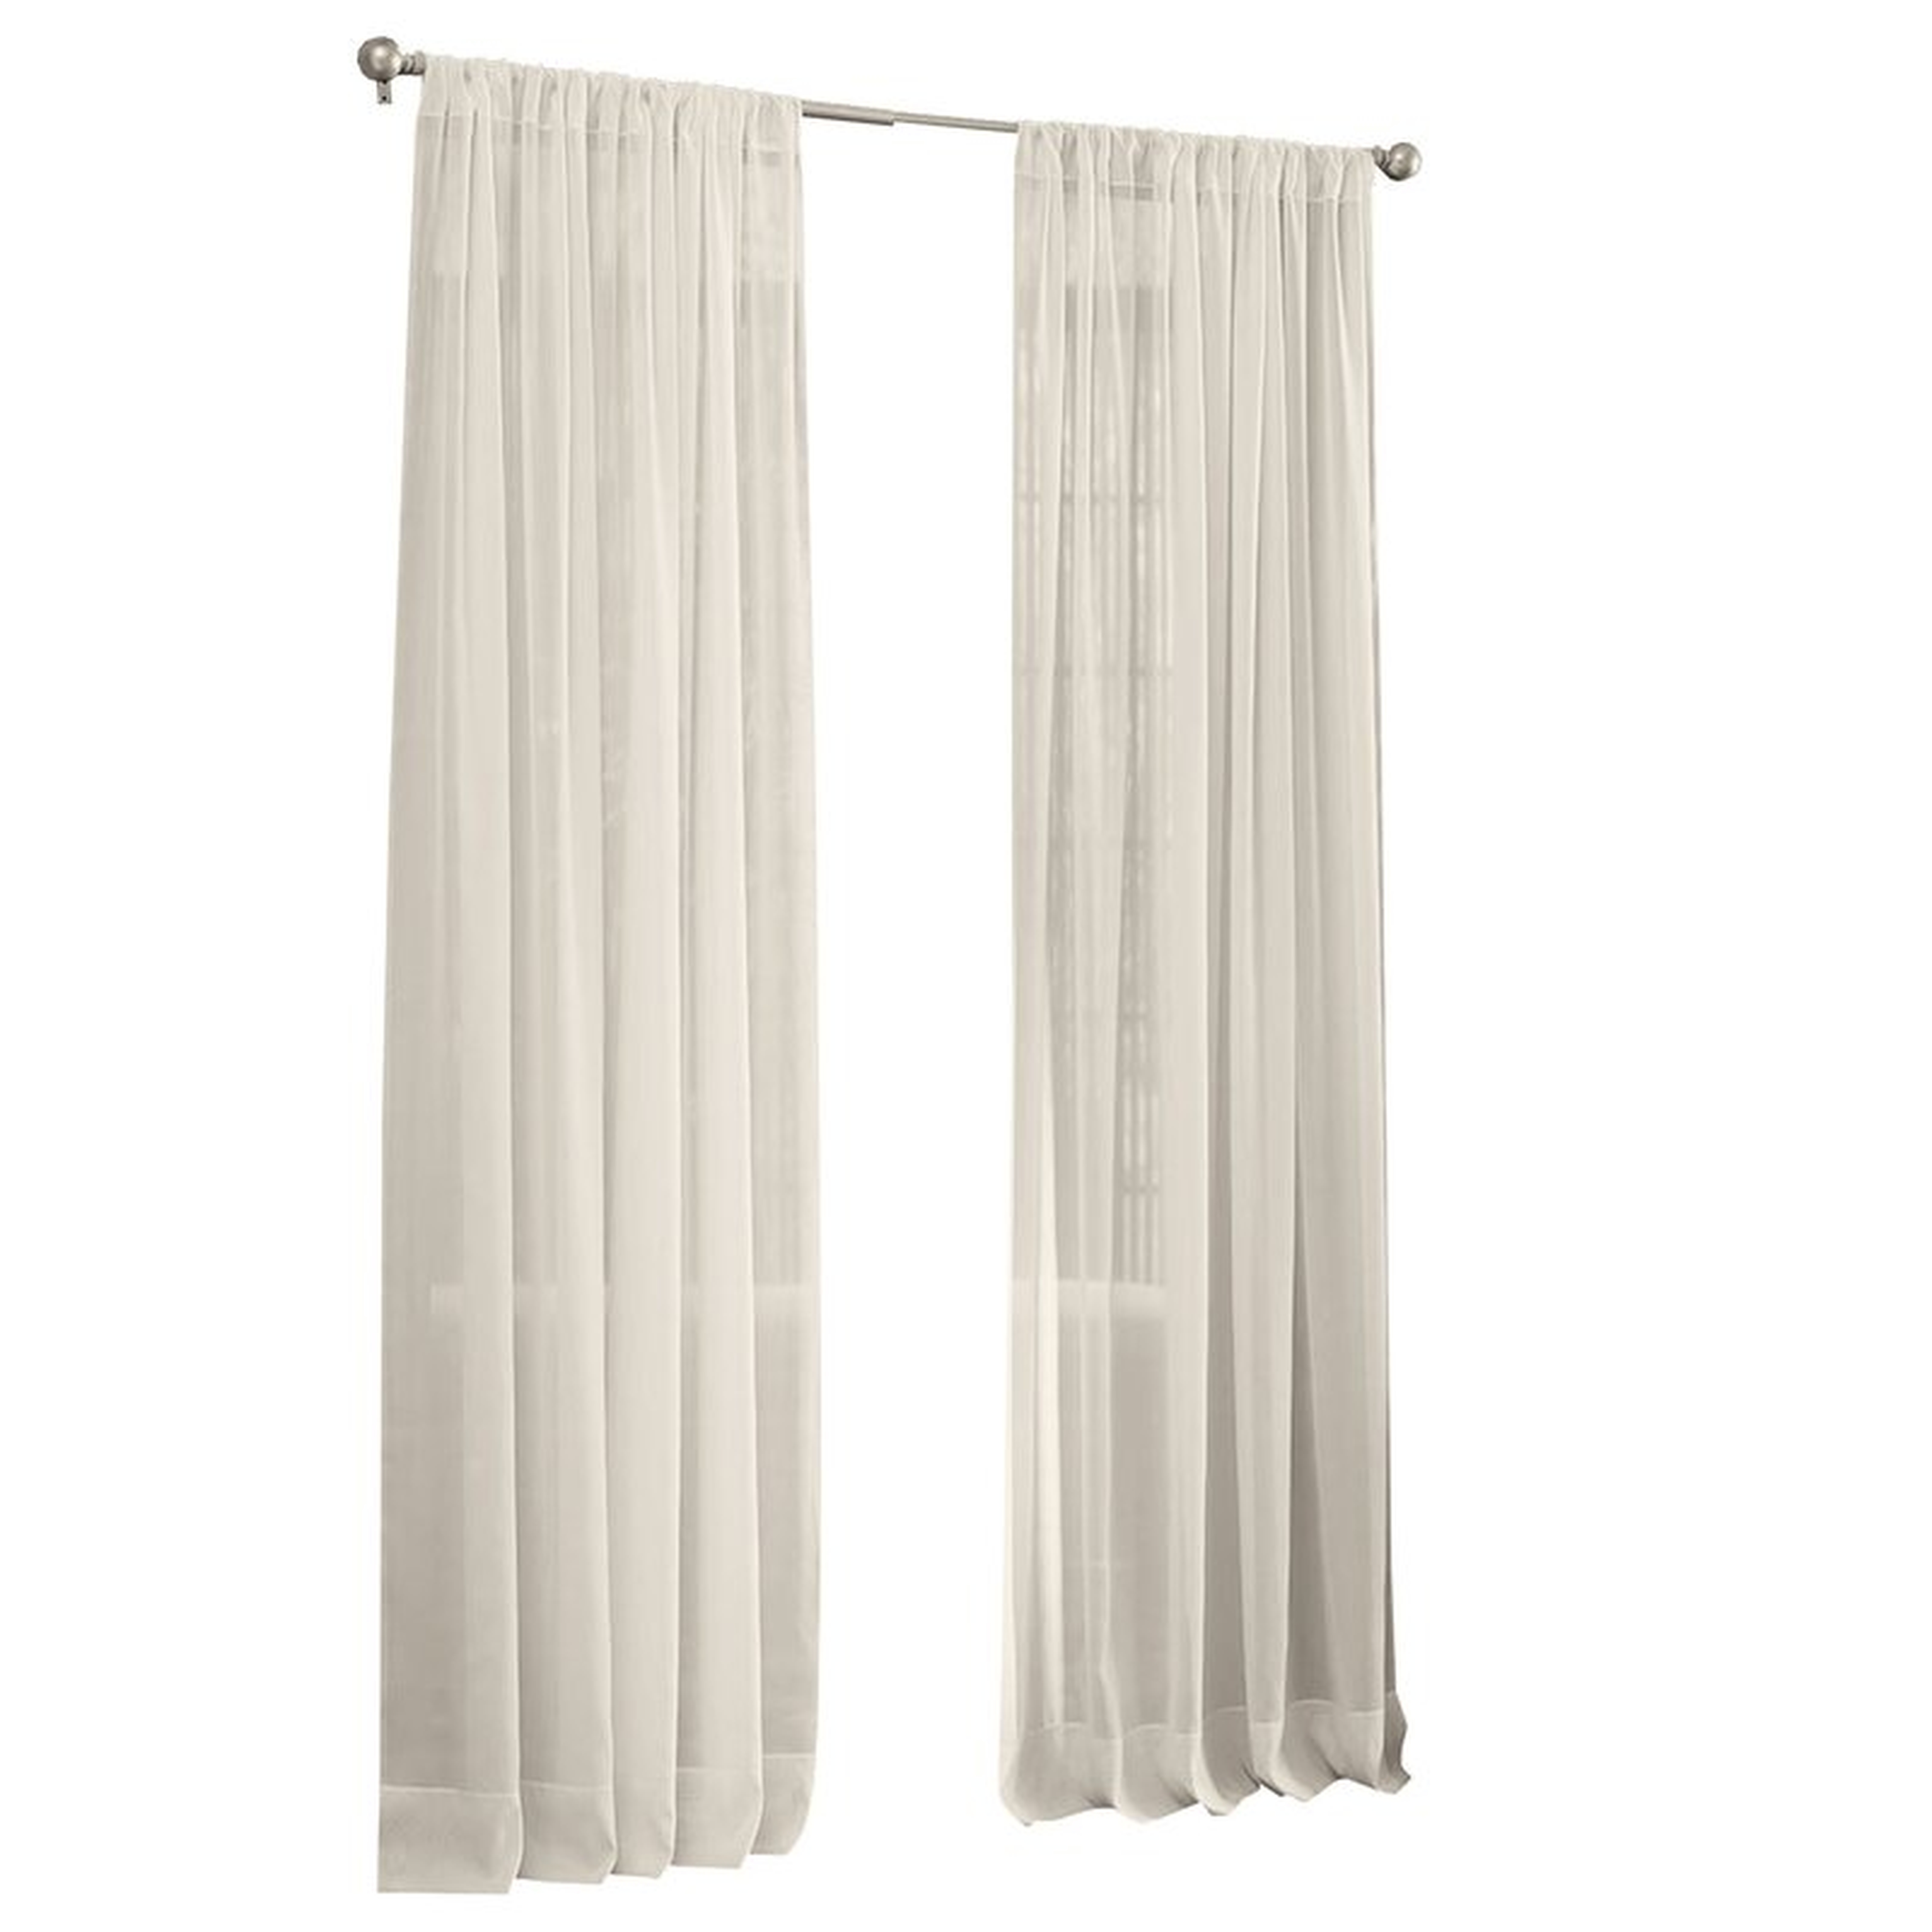 Estill Voile Solid Sheer Rod Pocket Single Curtain Panel - Wayfair